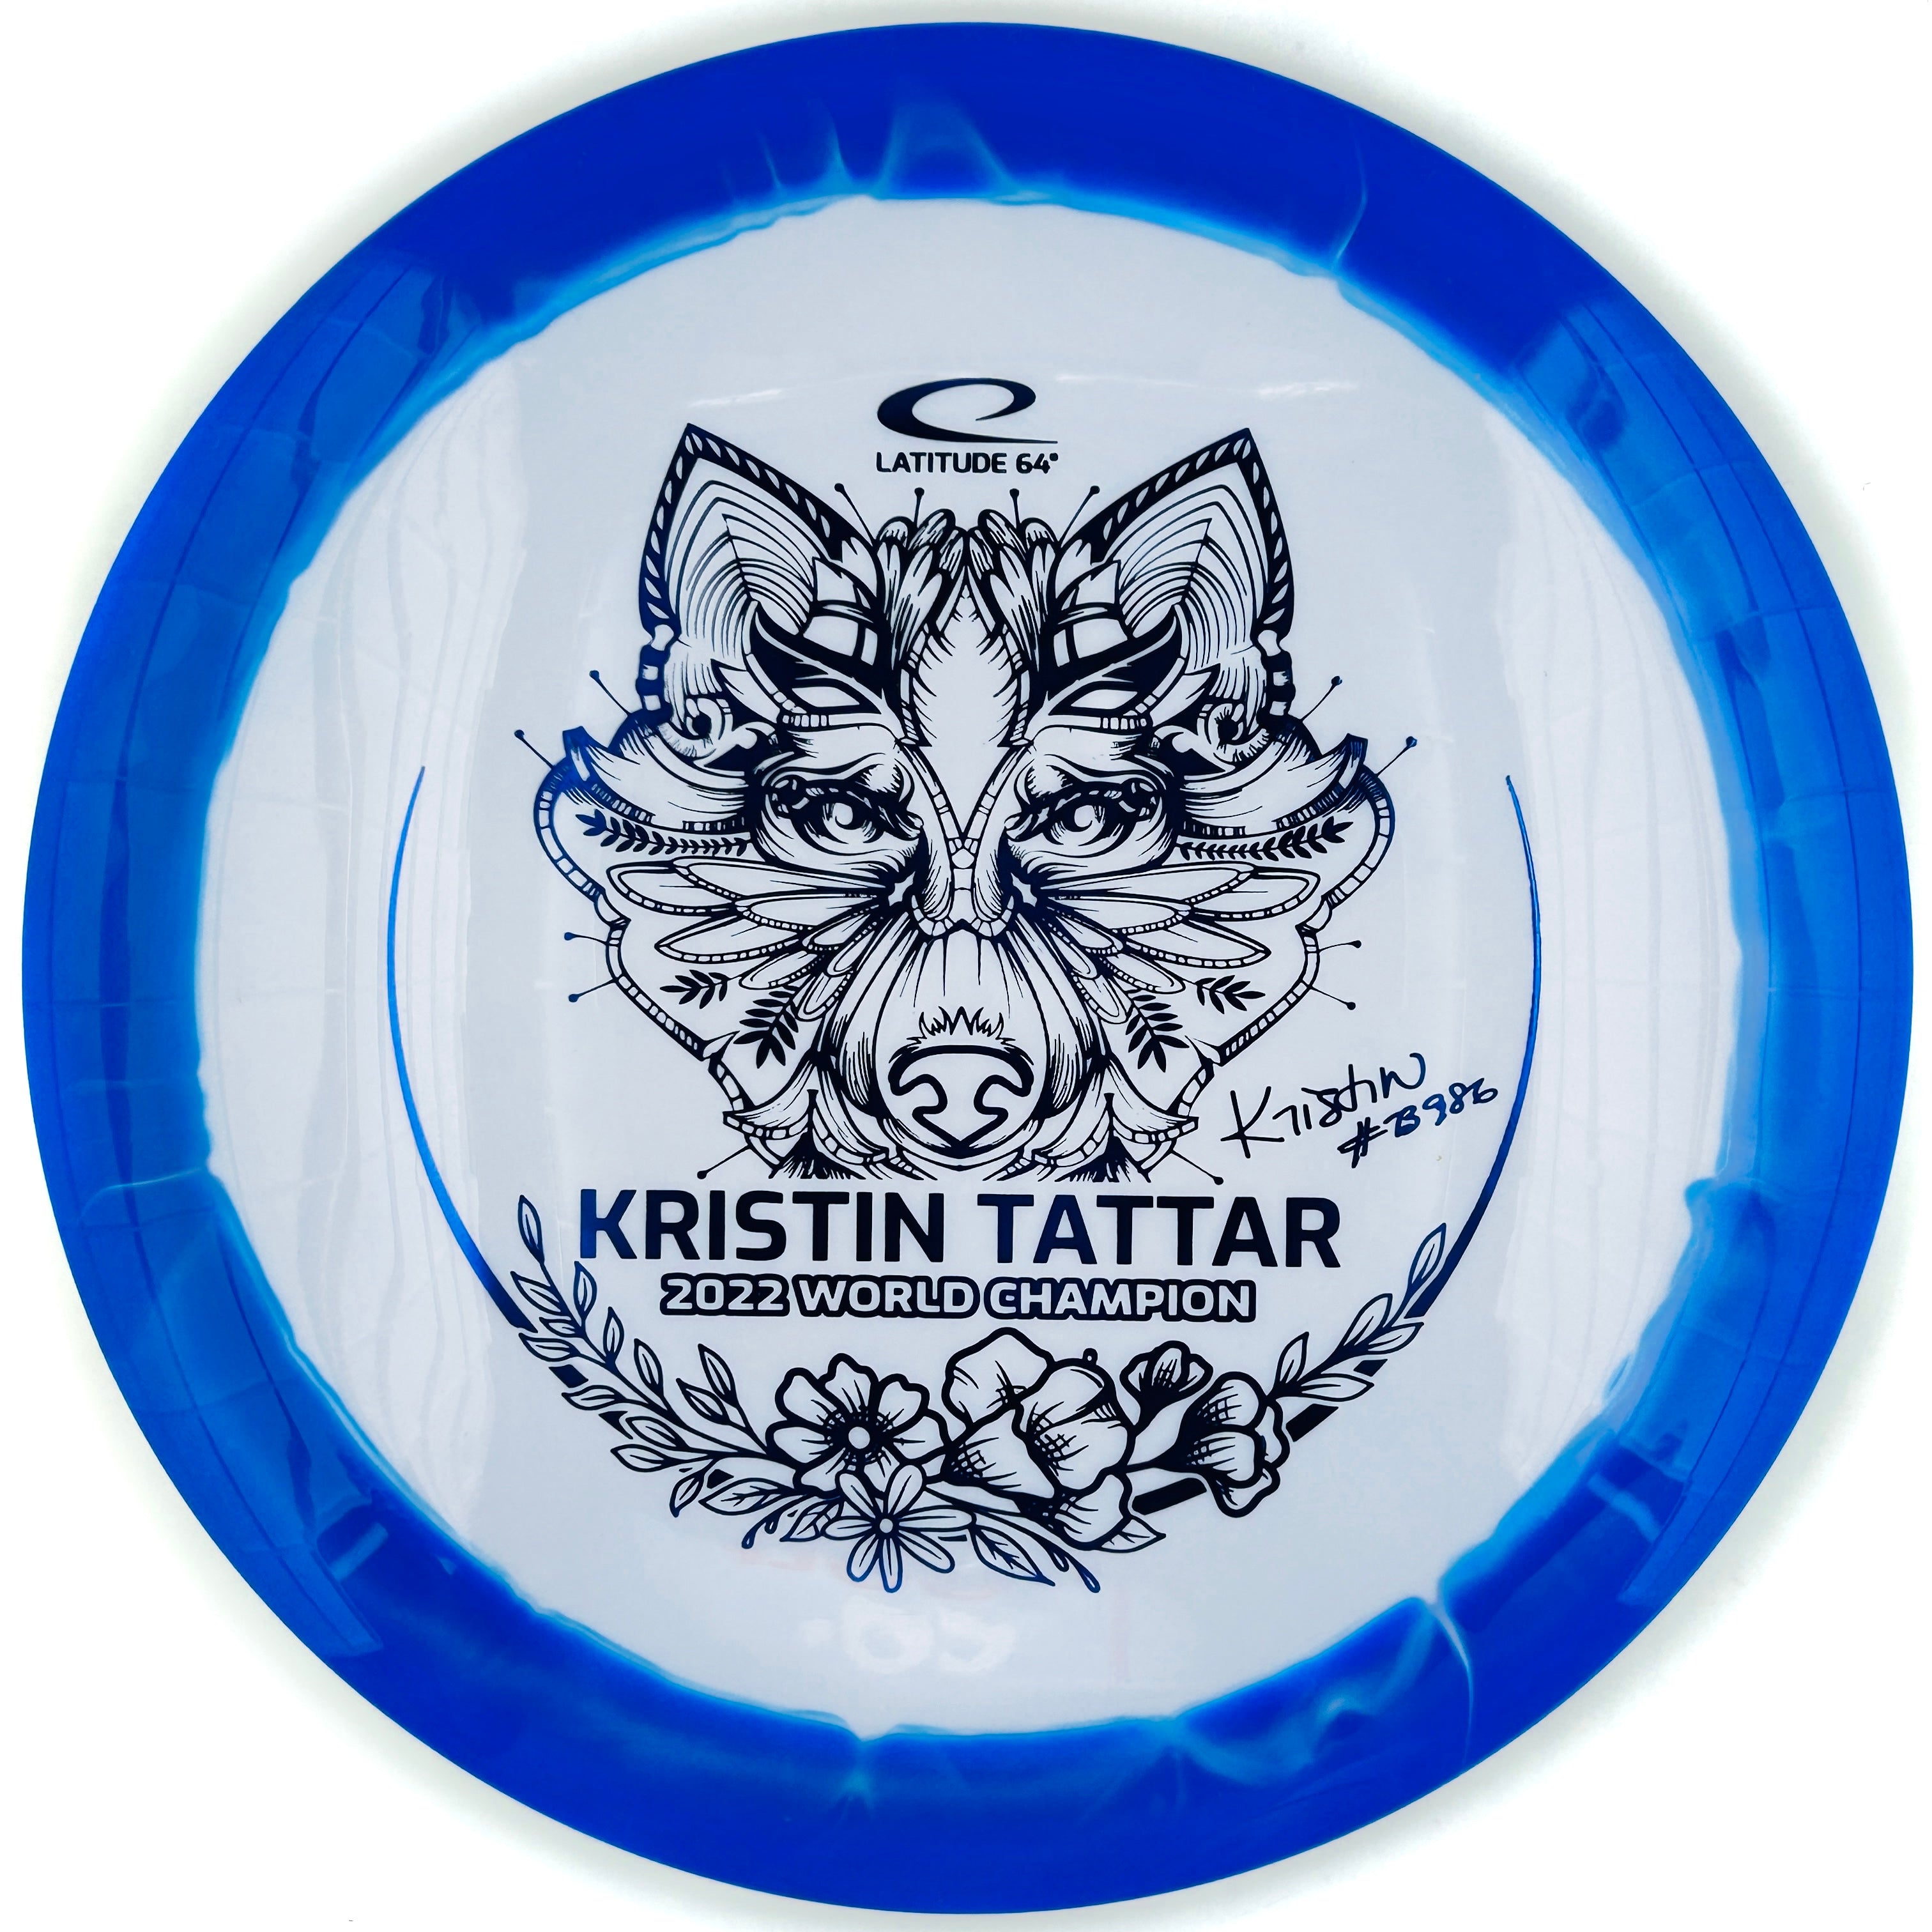 Latitude 64 Royal Grand Orbit Grace - 2022 Kristin Tattar World Champion (Distance Driver)